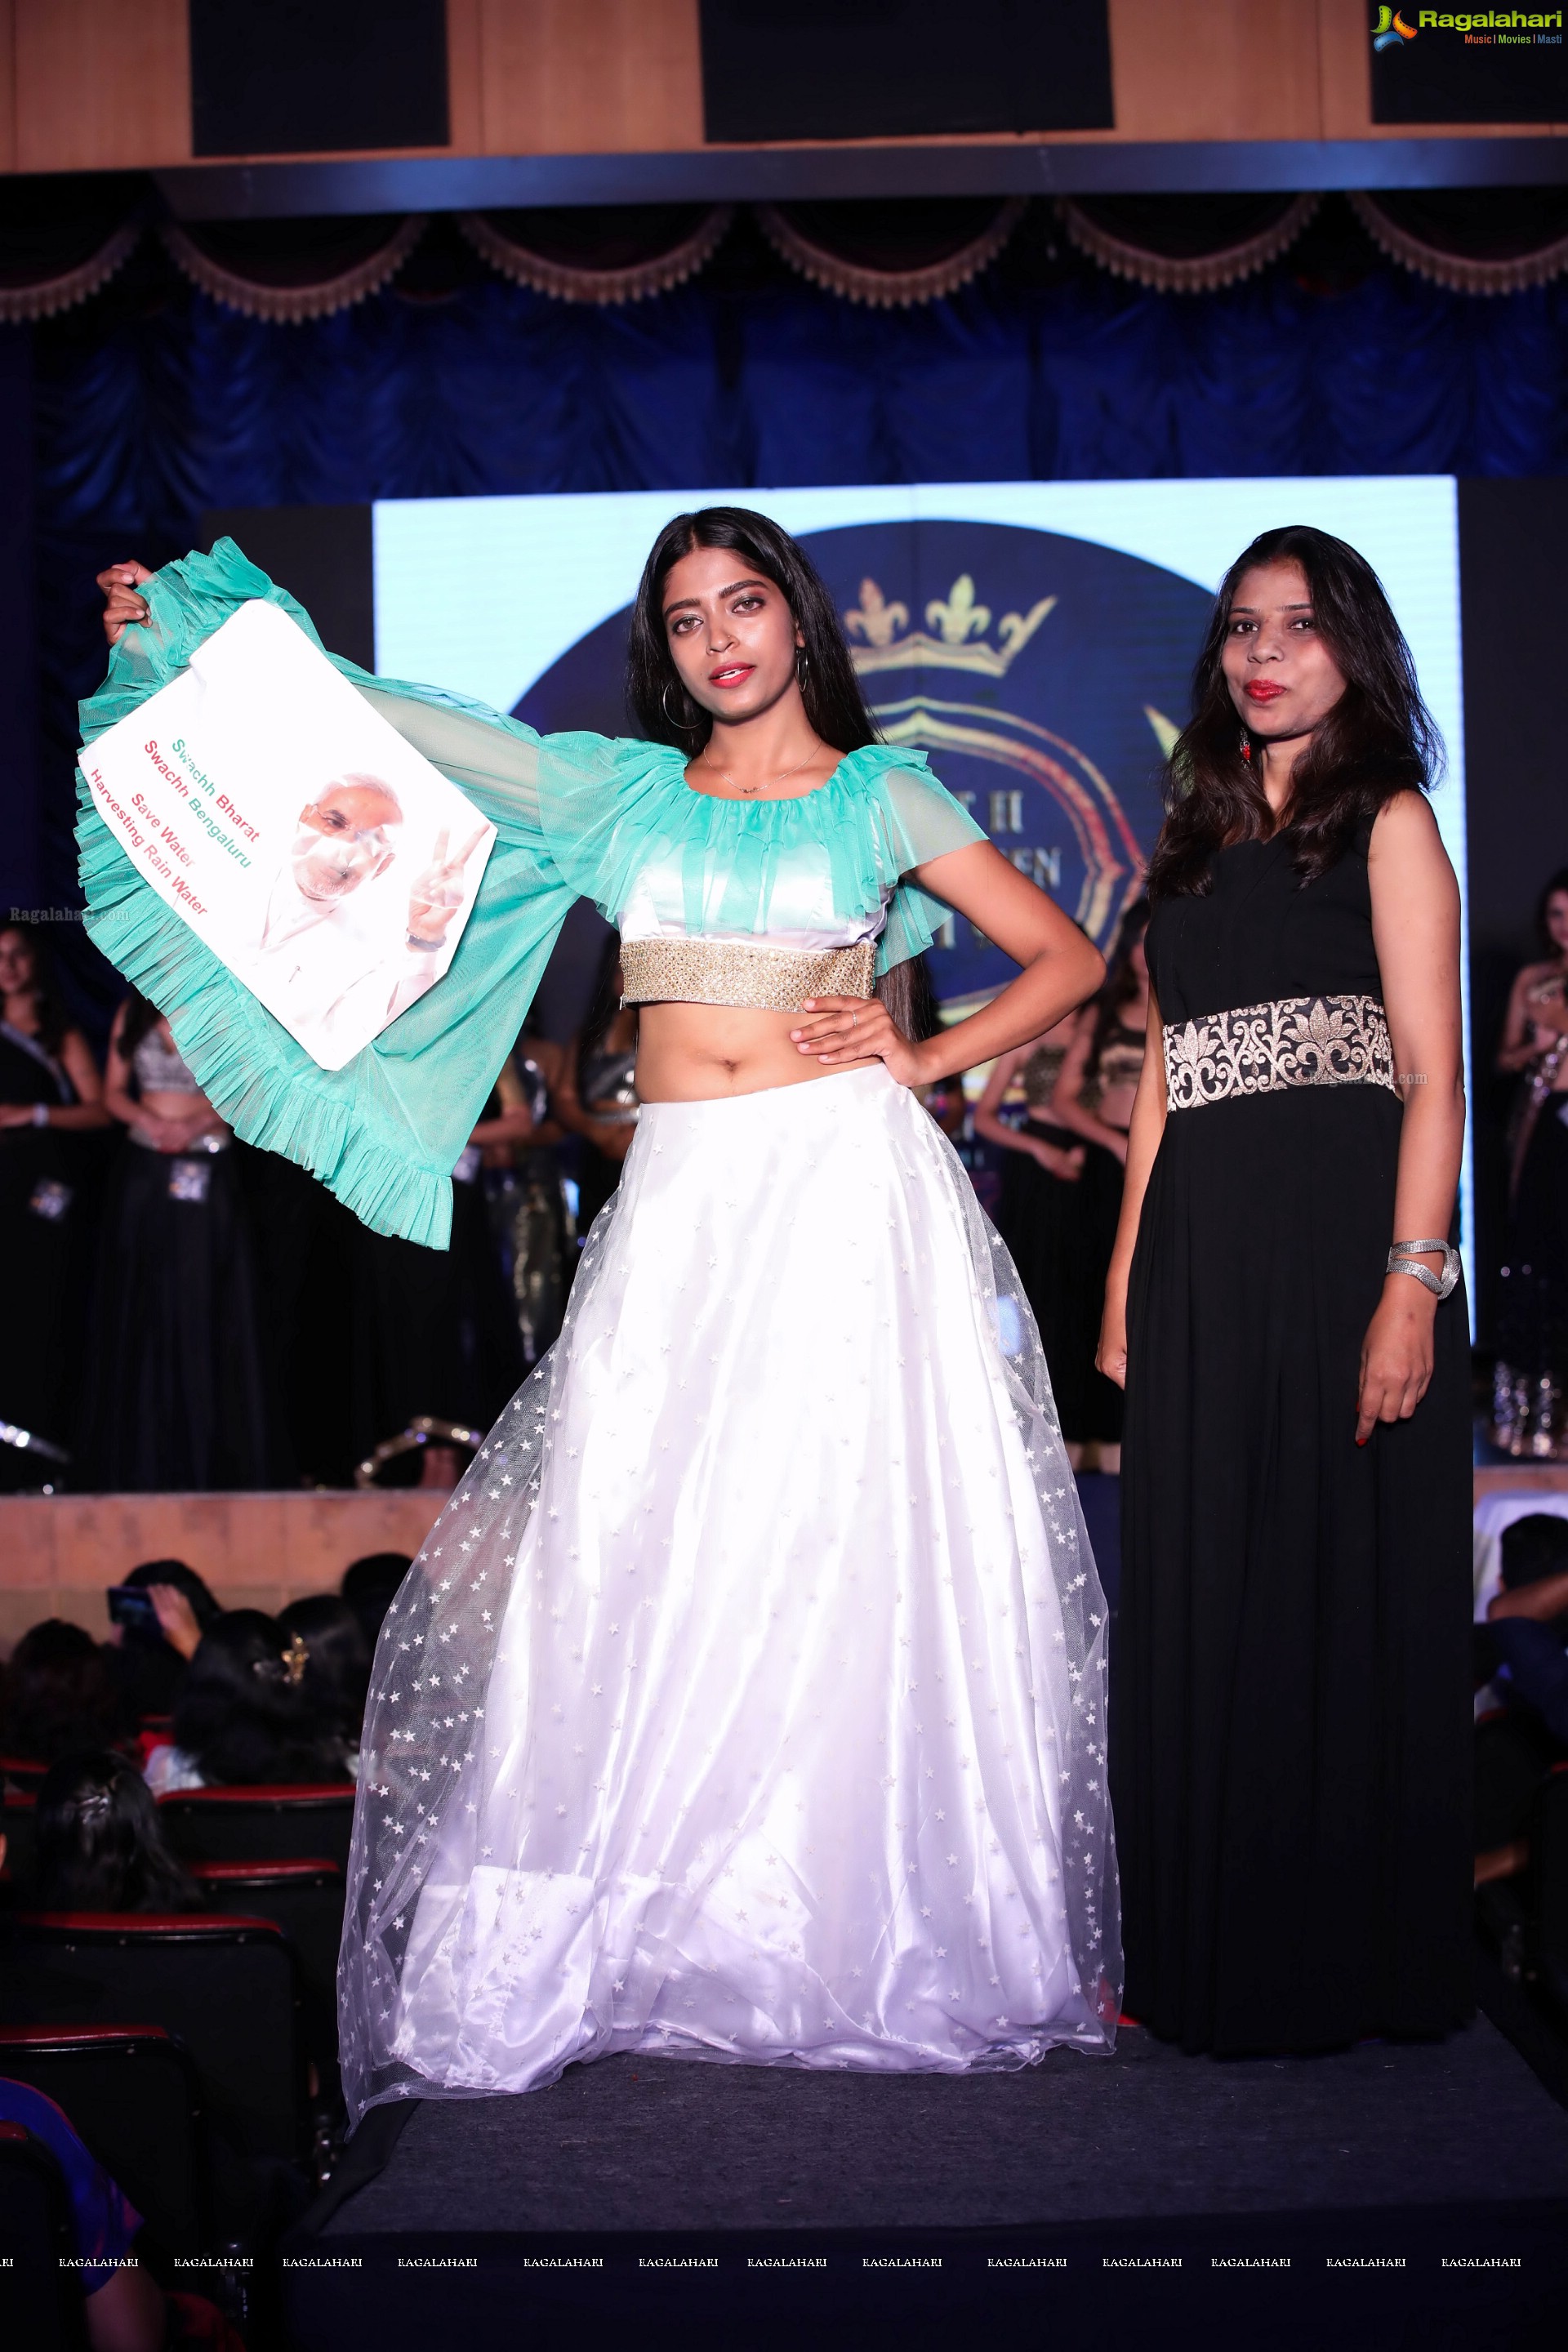 South India Queen 2019 Grand Finale at Bunts Sangha Auditorium, Bangalore